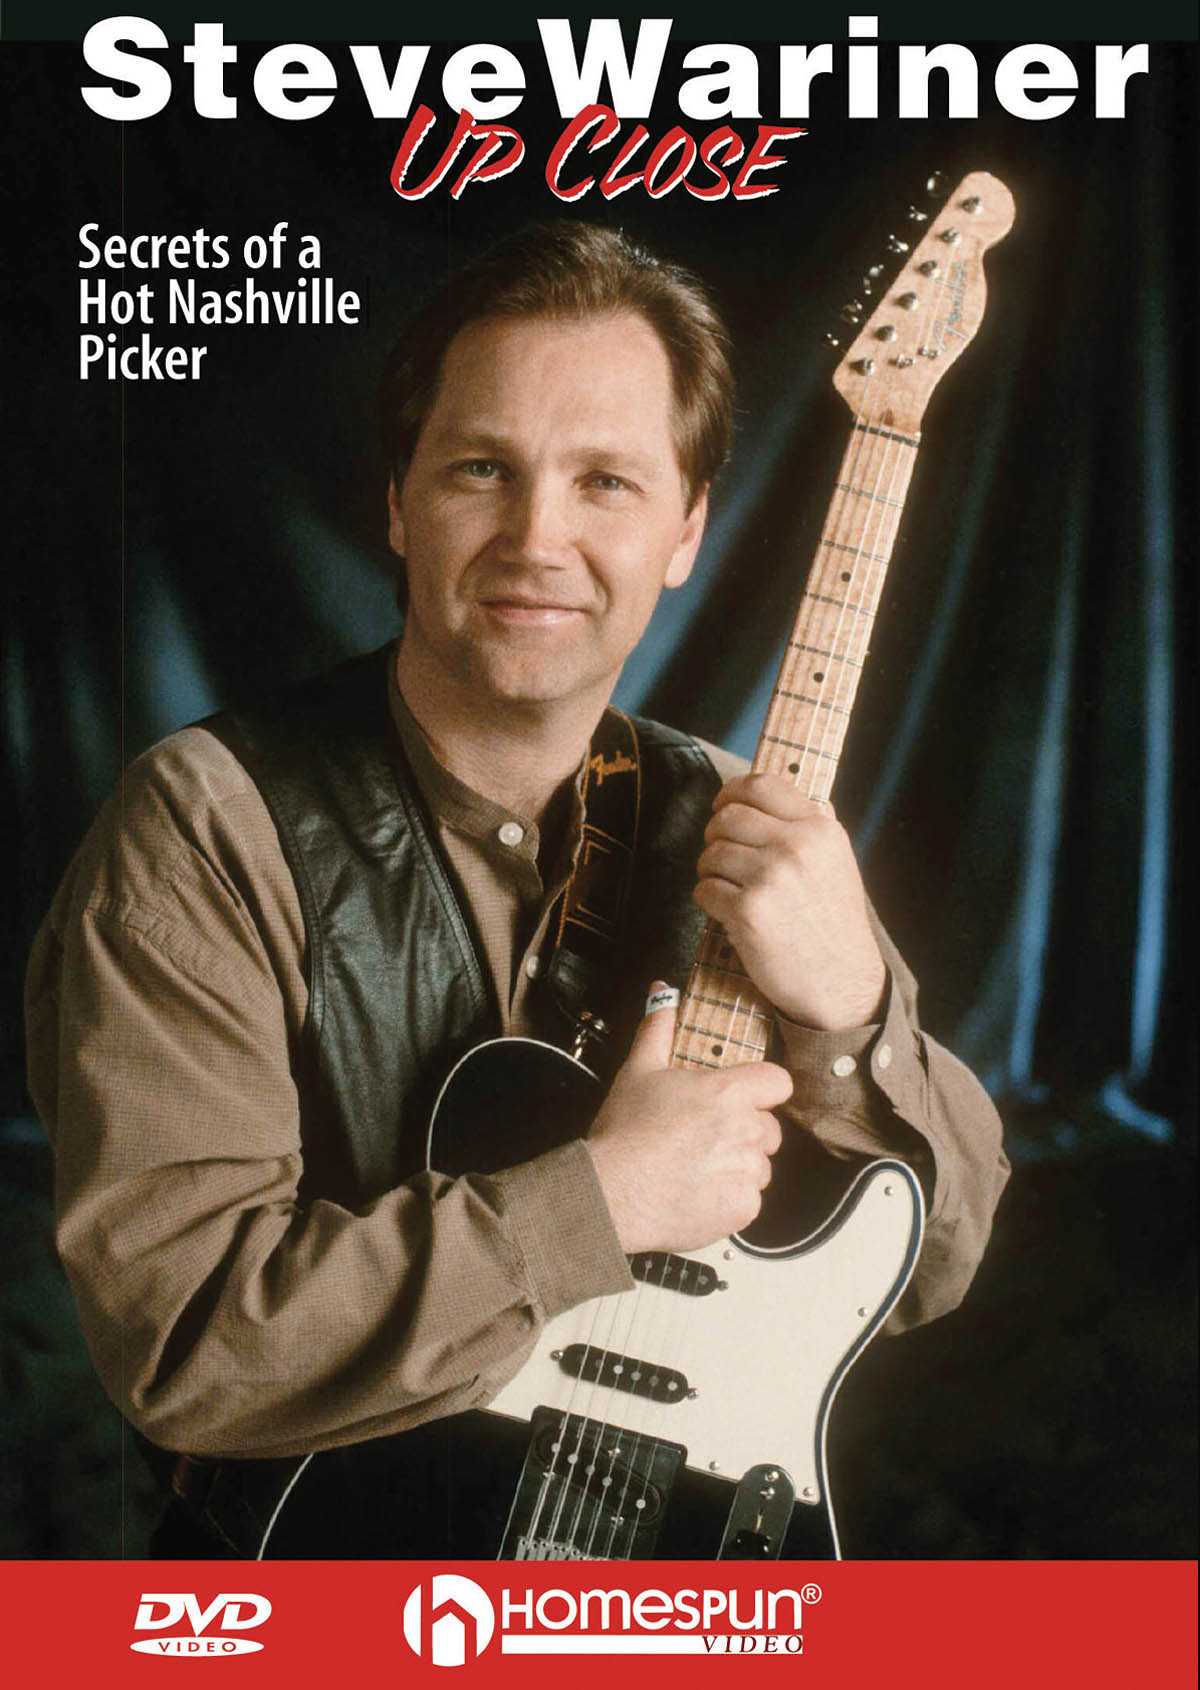 Image 1 of DVD - Steve Wariner Up Close - Secrets of a Hot Nashville Picker - SKU# 300-DVD268 : Product Type Media : Elderly Instruments